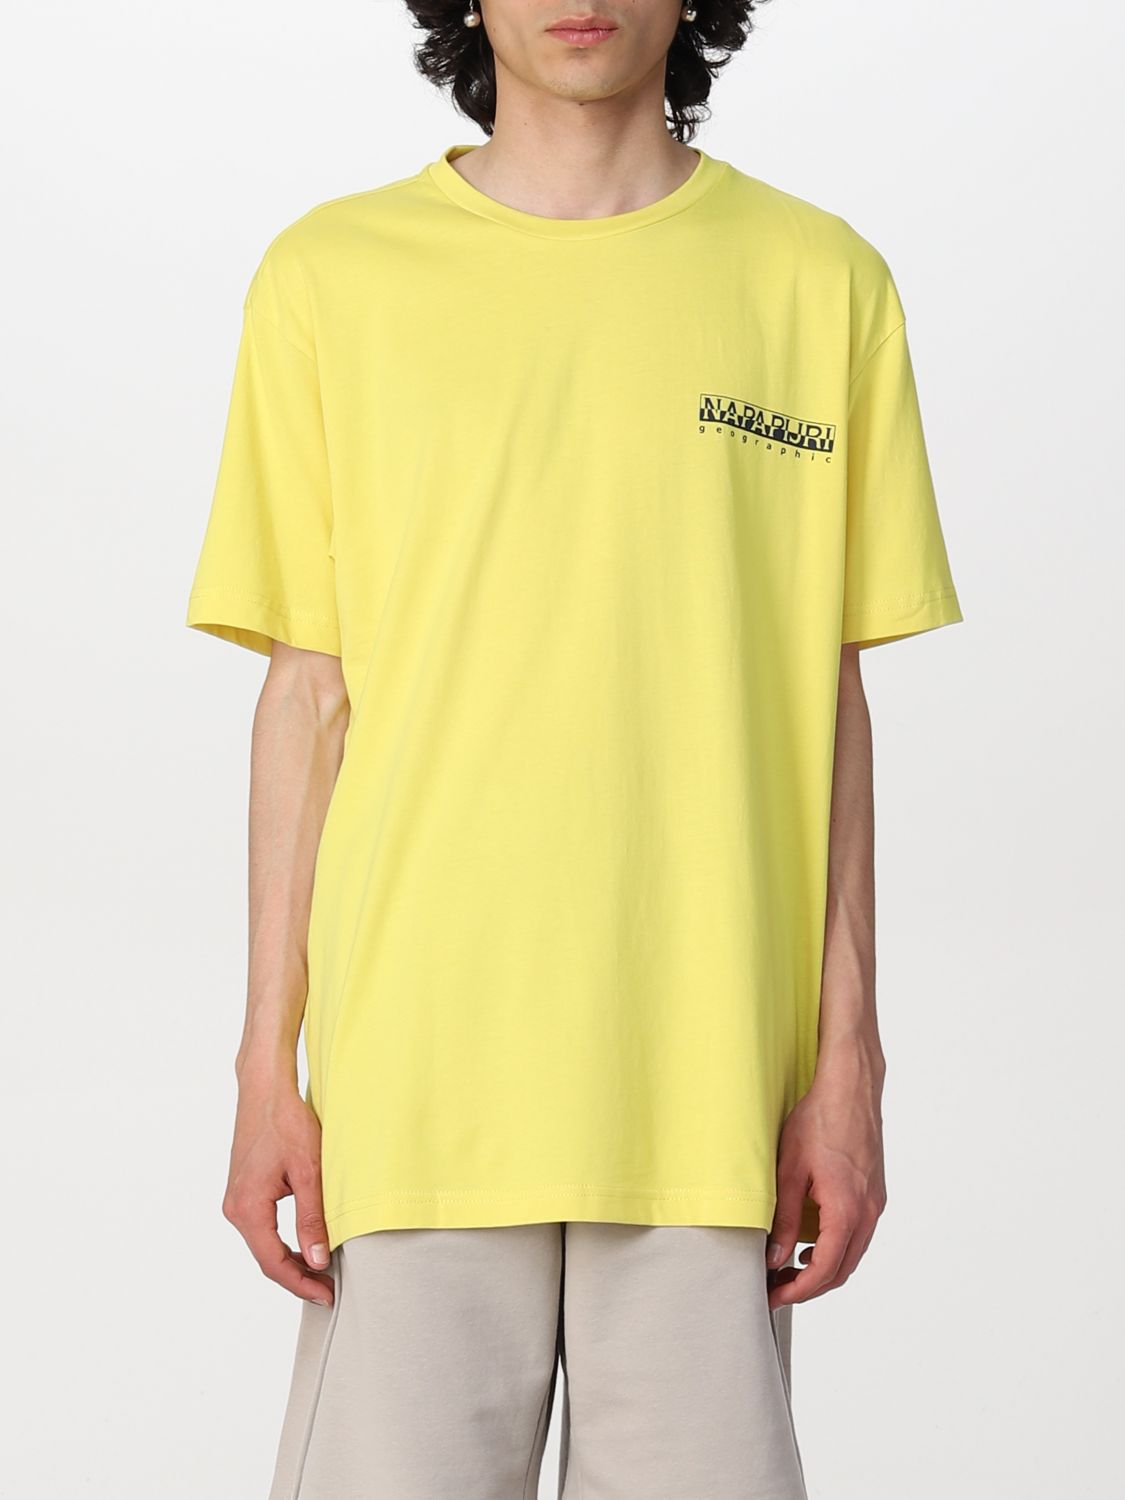 NAPAPIJRI: T-shirt with logo - Yellow | Napapijri t-shirt NP0A4G6B ...